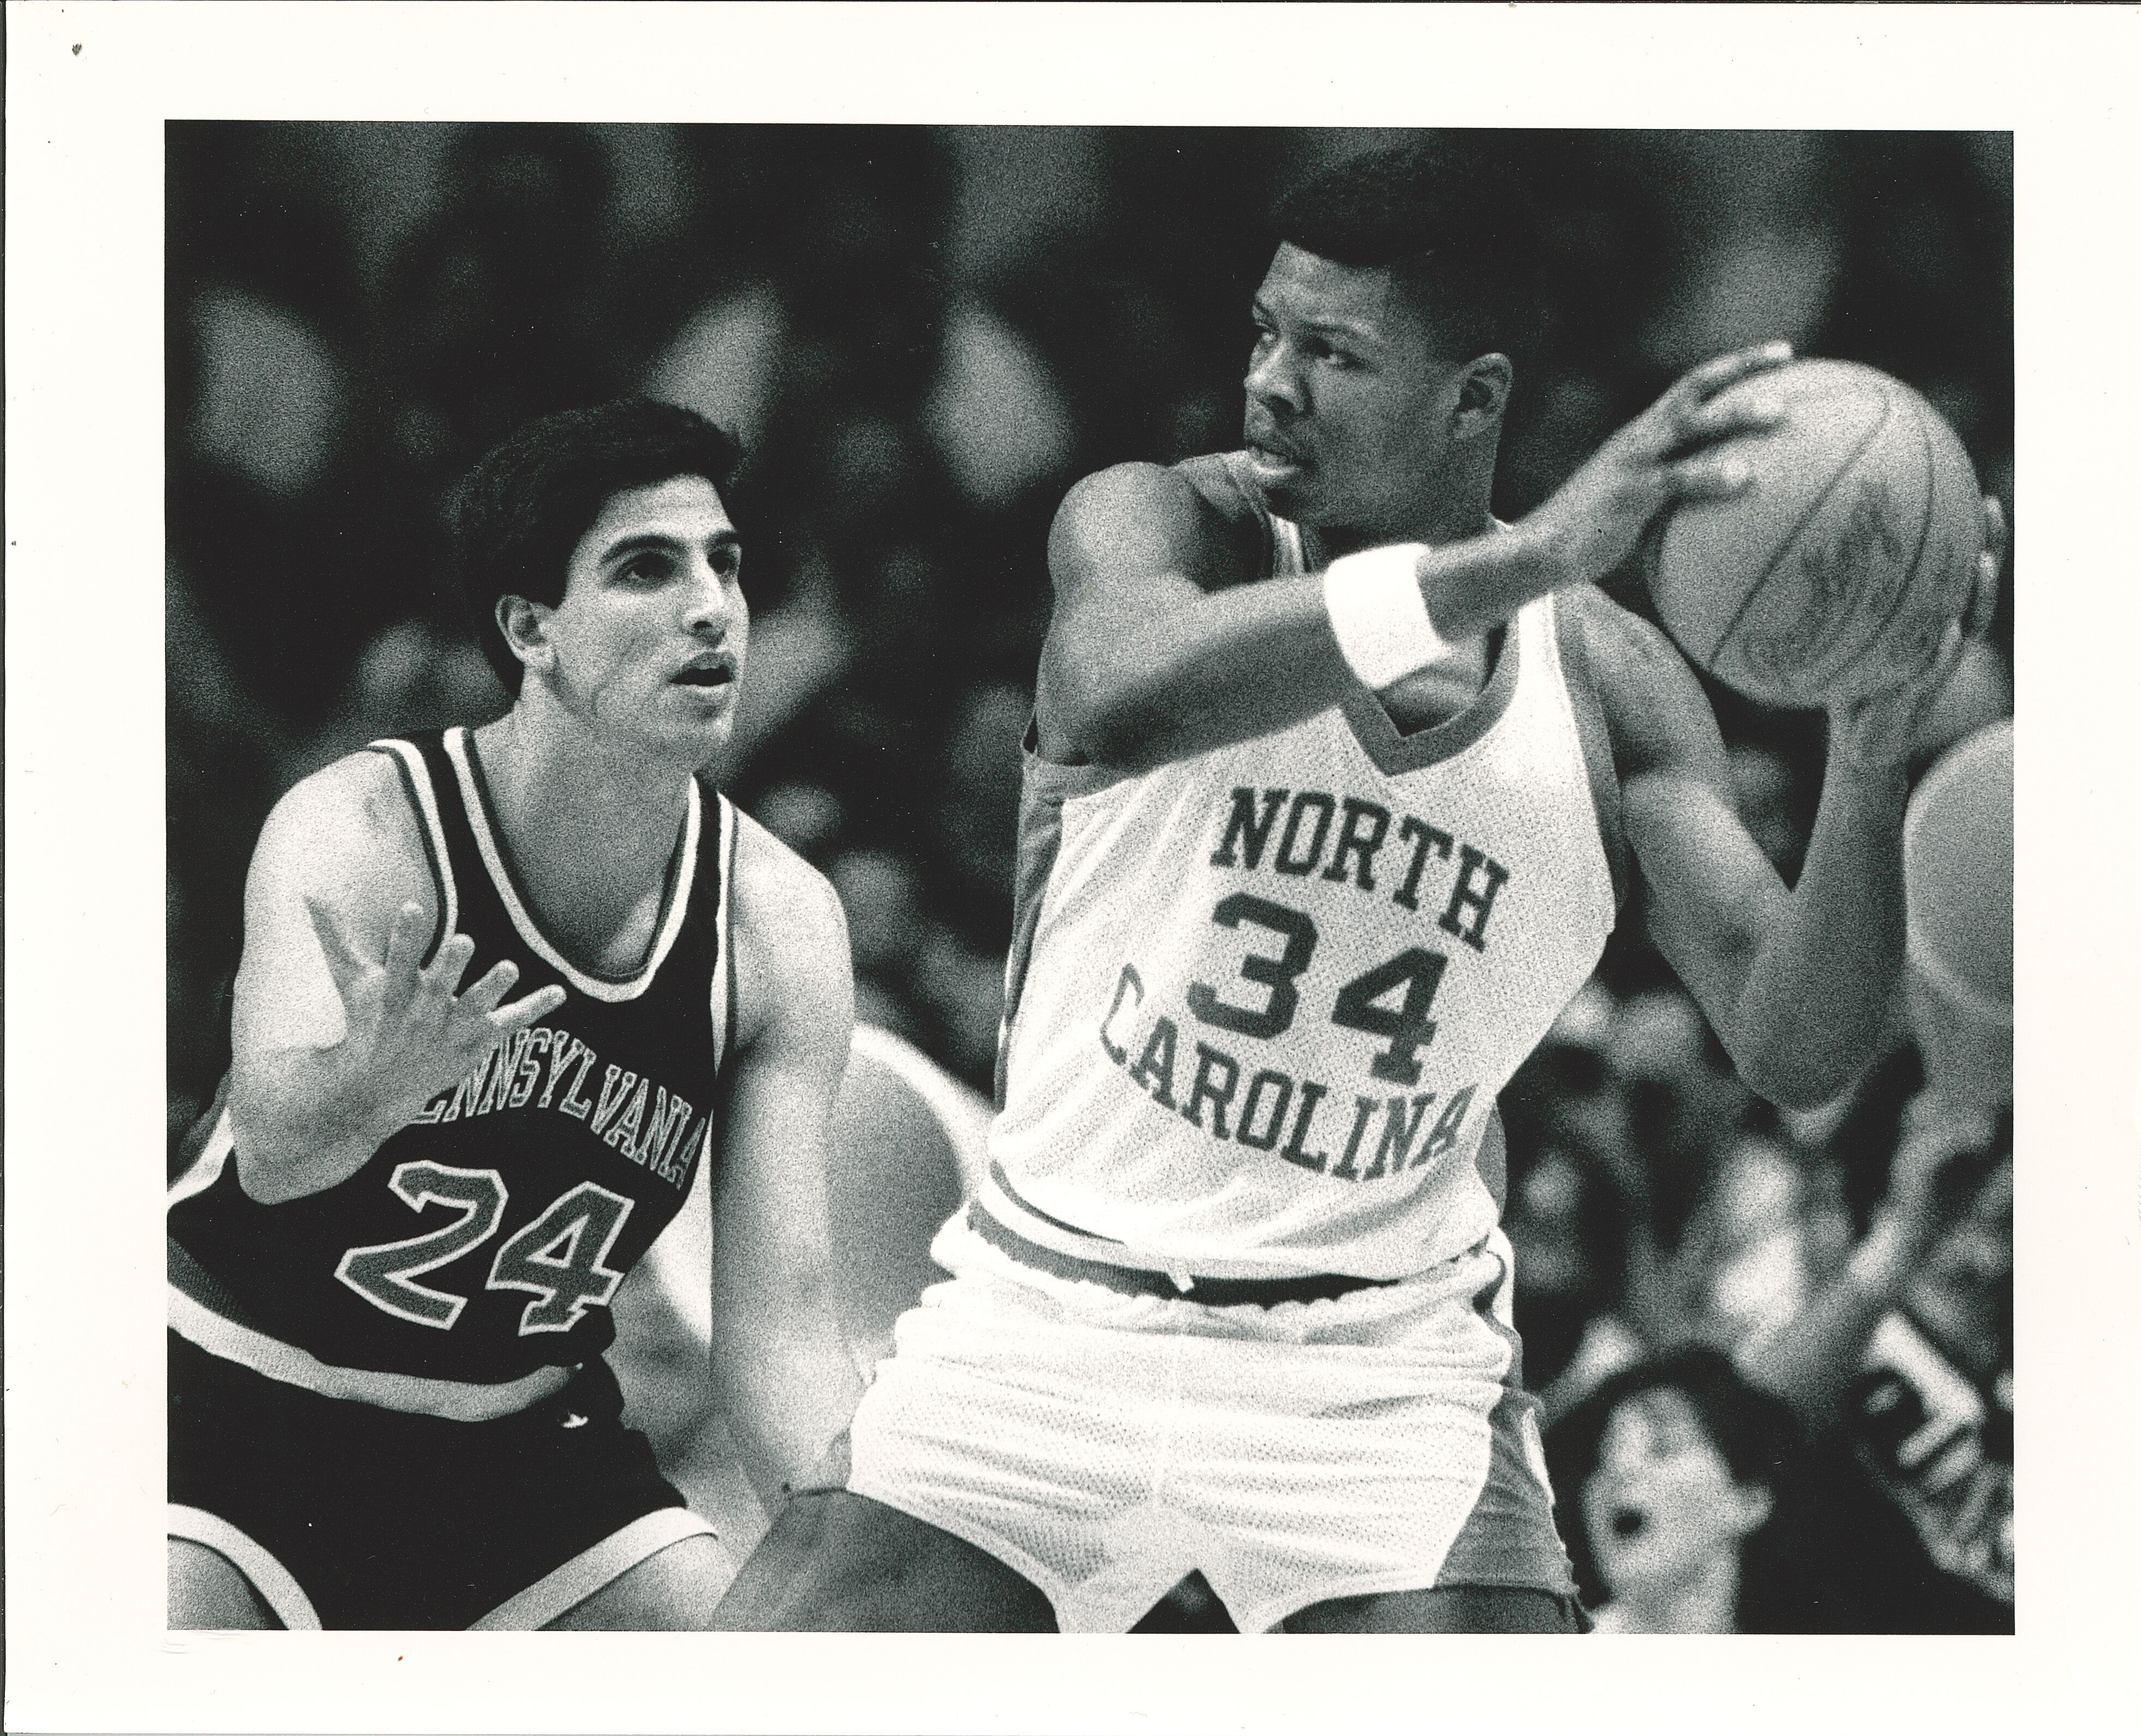 Bruce Lefkowitz defends North Carolina freshman J.R. Reid during the 1987 Men’s Division I NCAA Basketball Tournament.